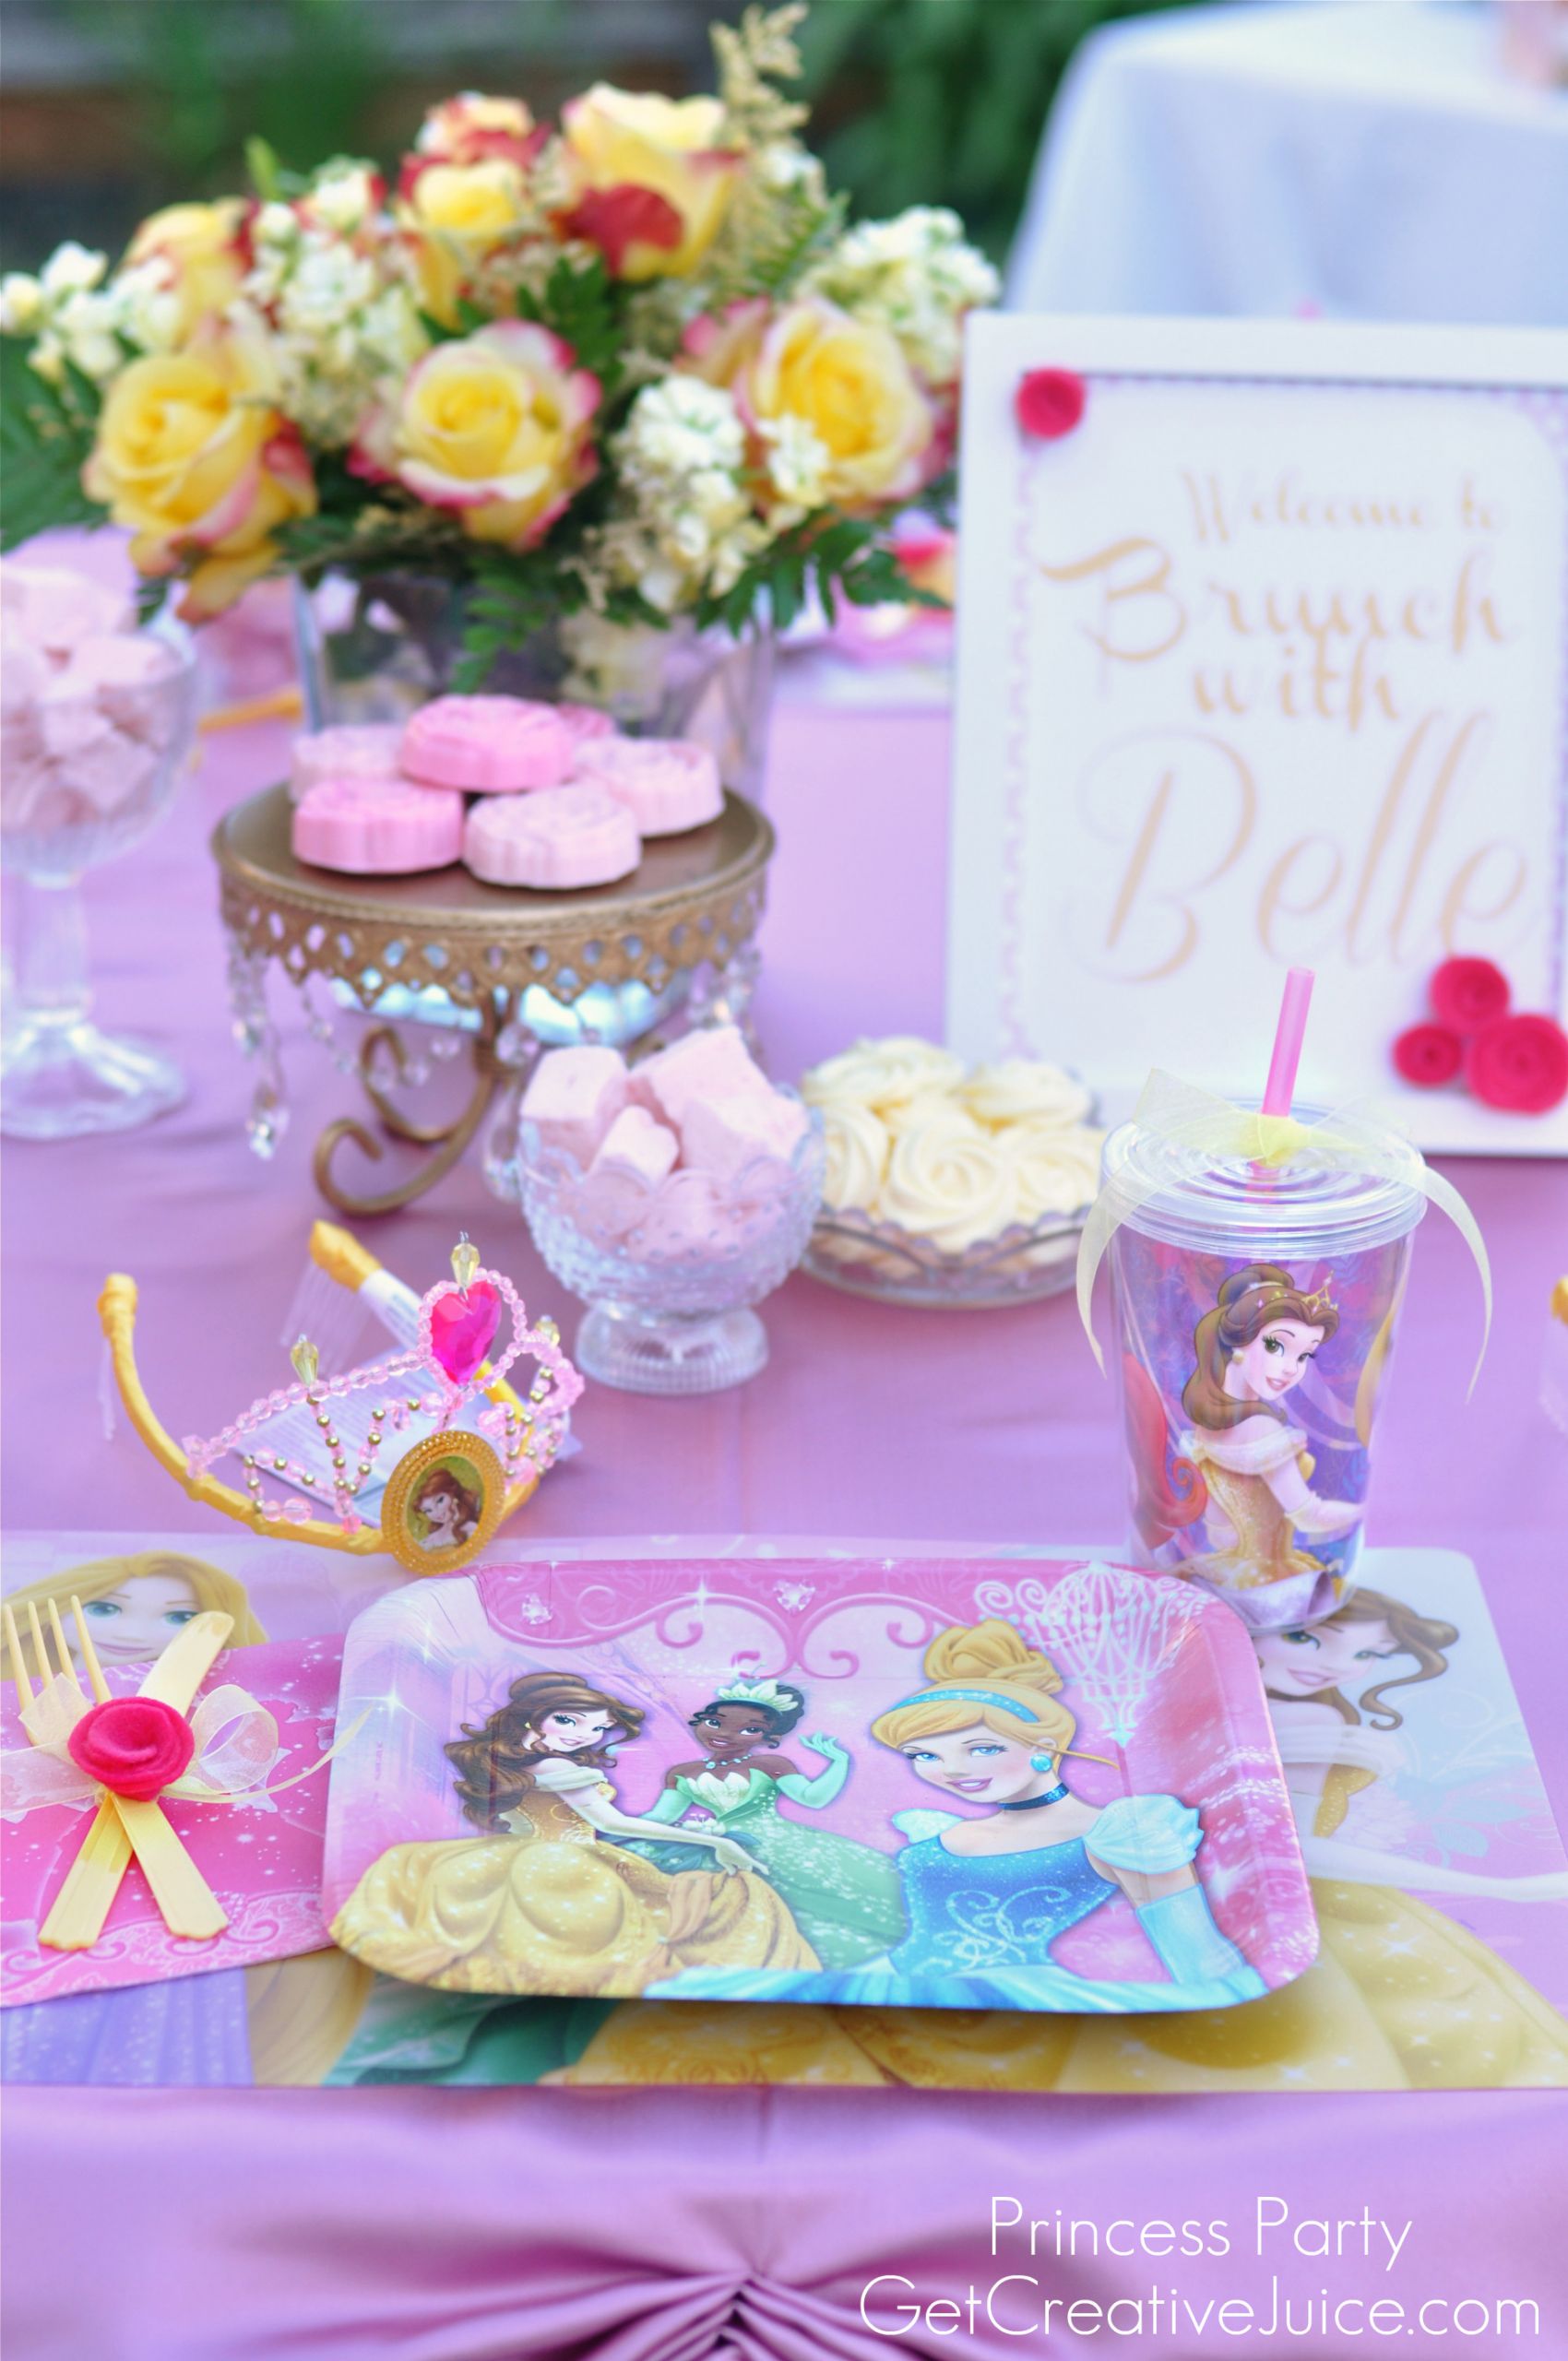 Princess Birthday Party Decoration Ideas
 Disney Princess Party with Belle Part e Creative Juice